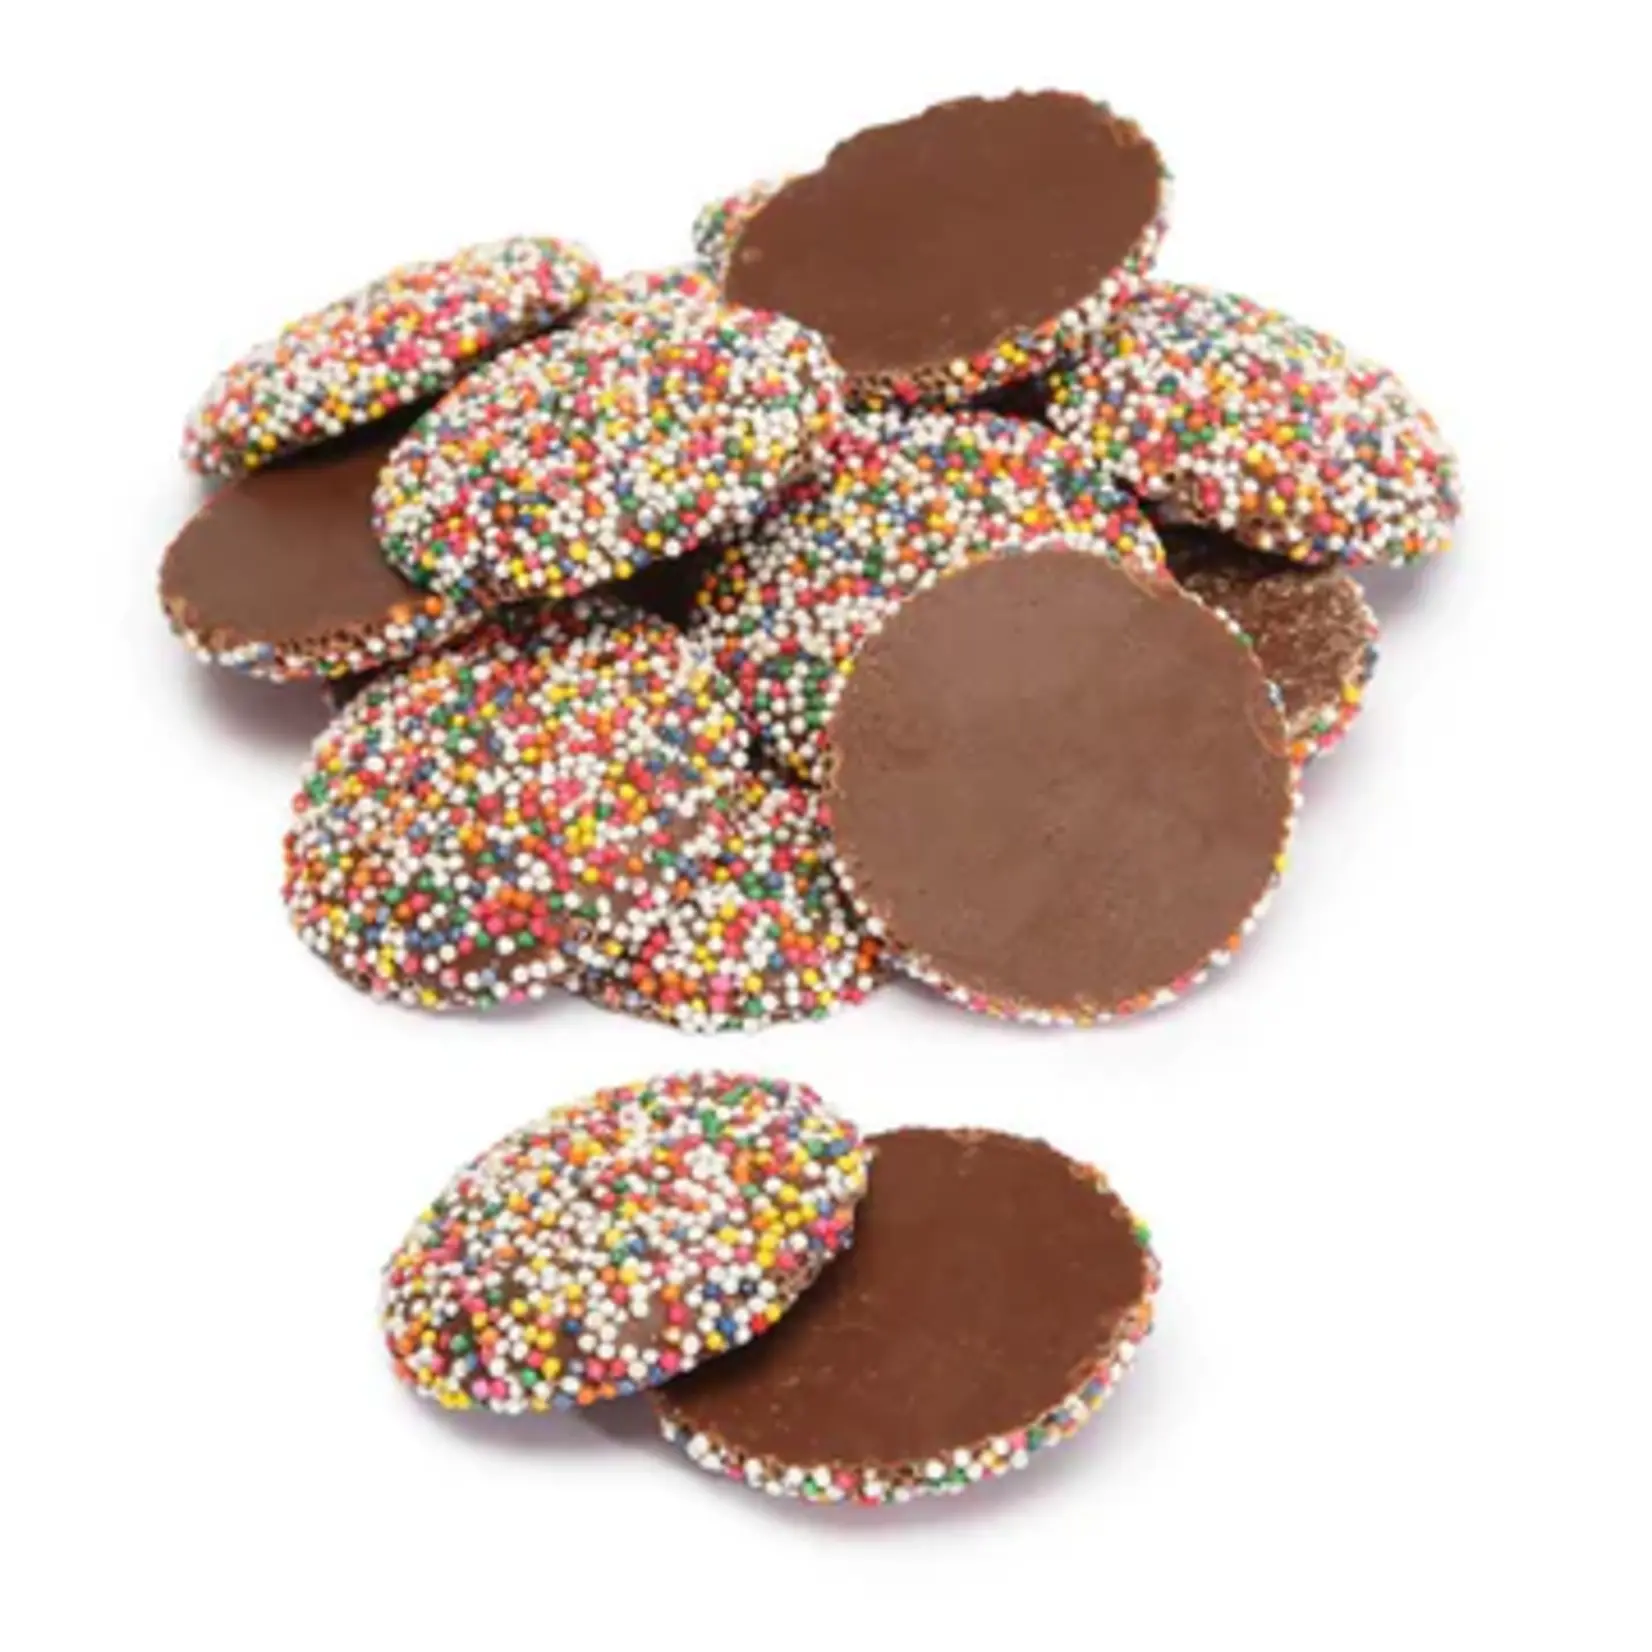 Chocolate Non-Pareils Snack Pack